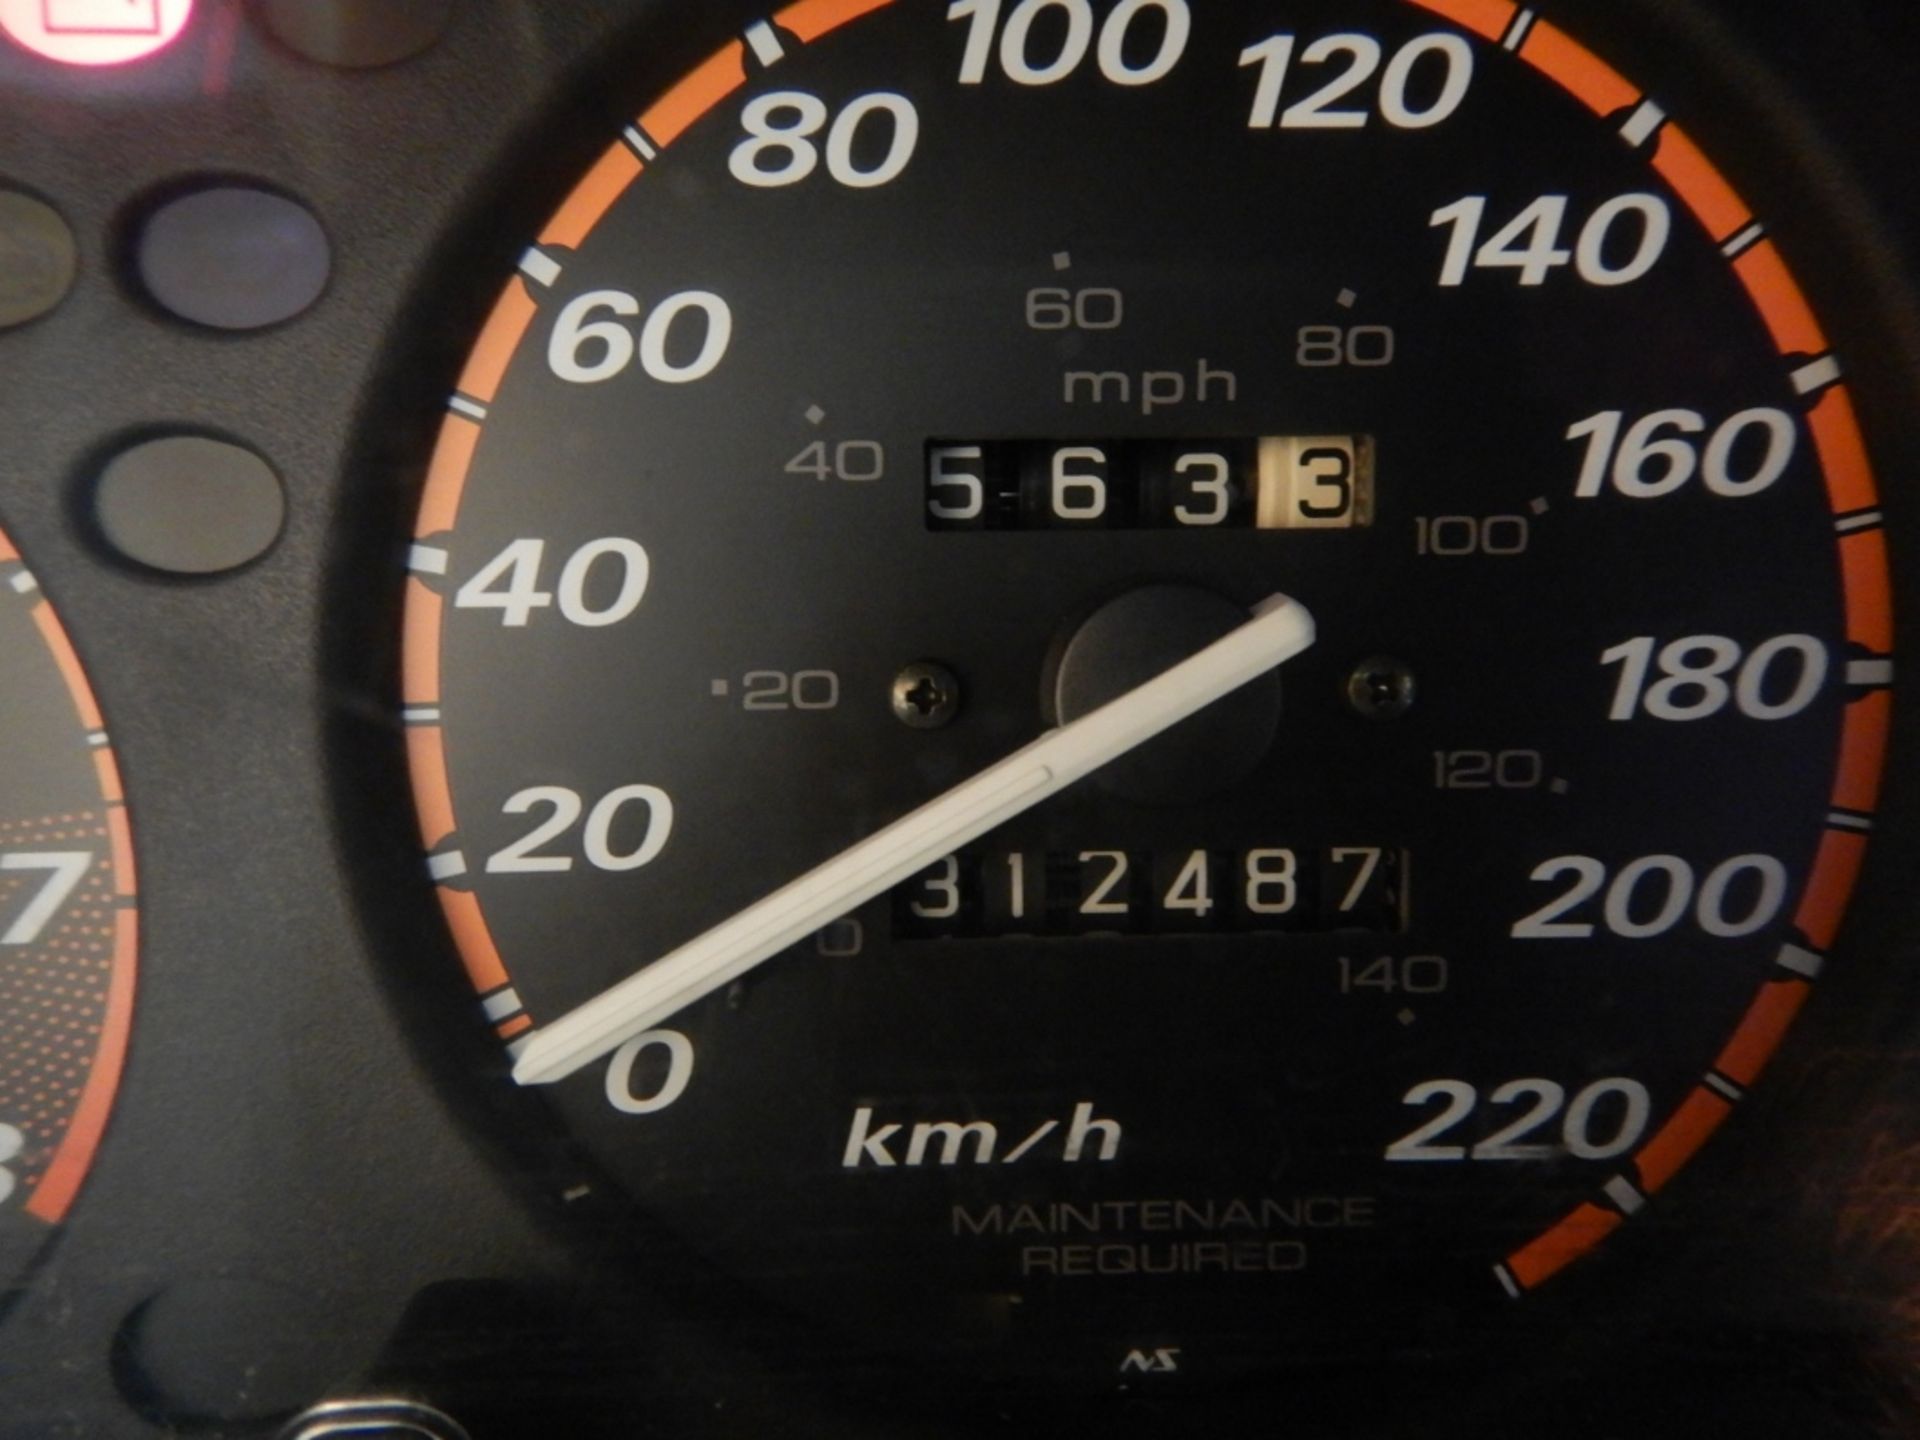 1999 HONDA CRV - 312,487 KM'S SHOWING, AUTO TRANS, S/N JHLRD1852XC808749 - Image 8 of 12